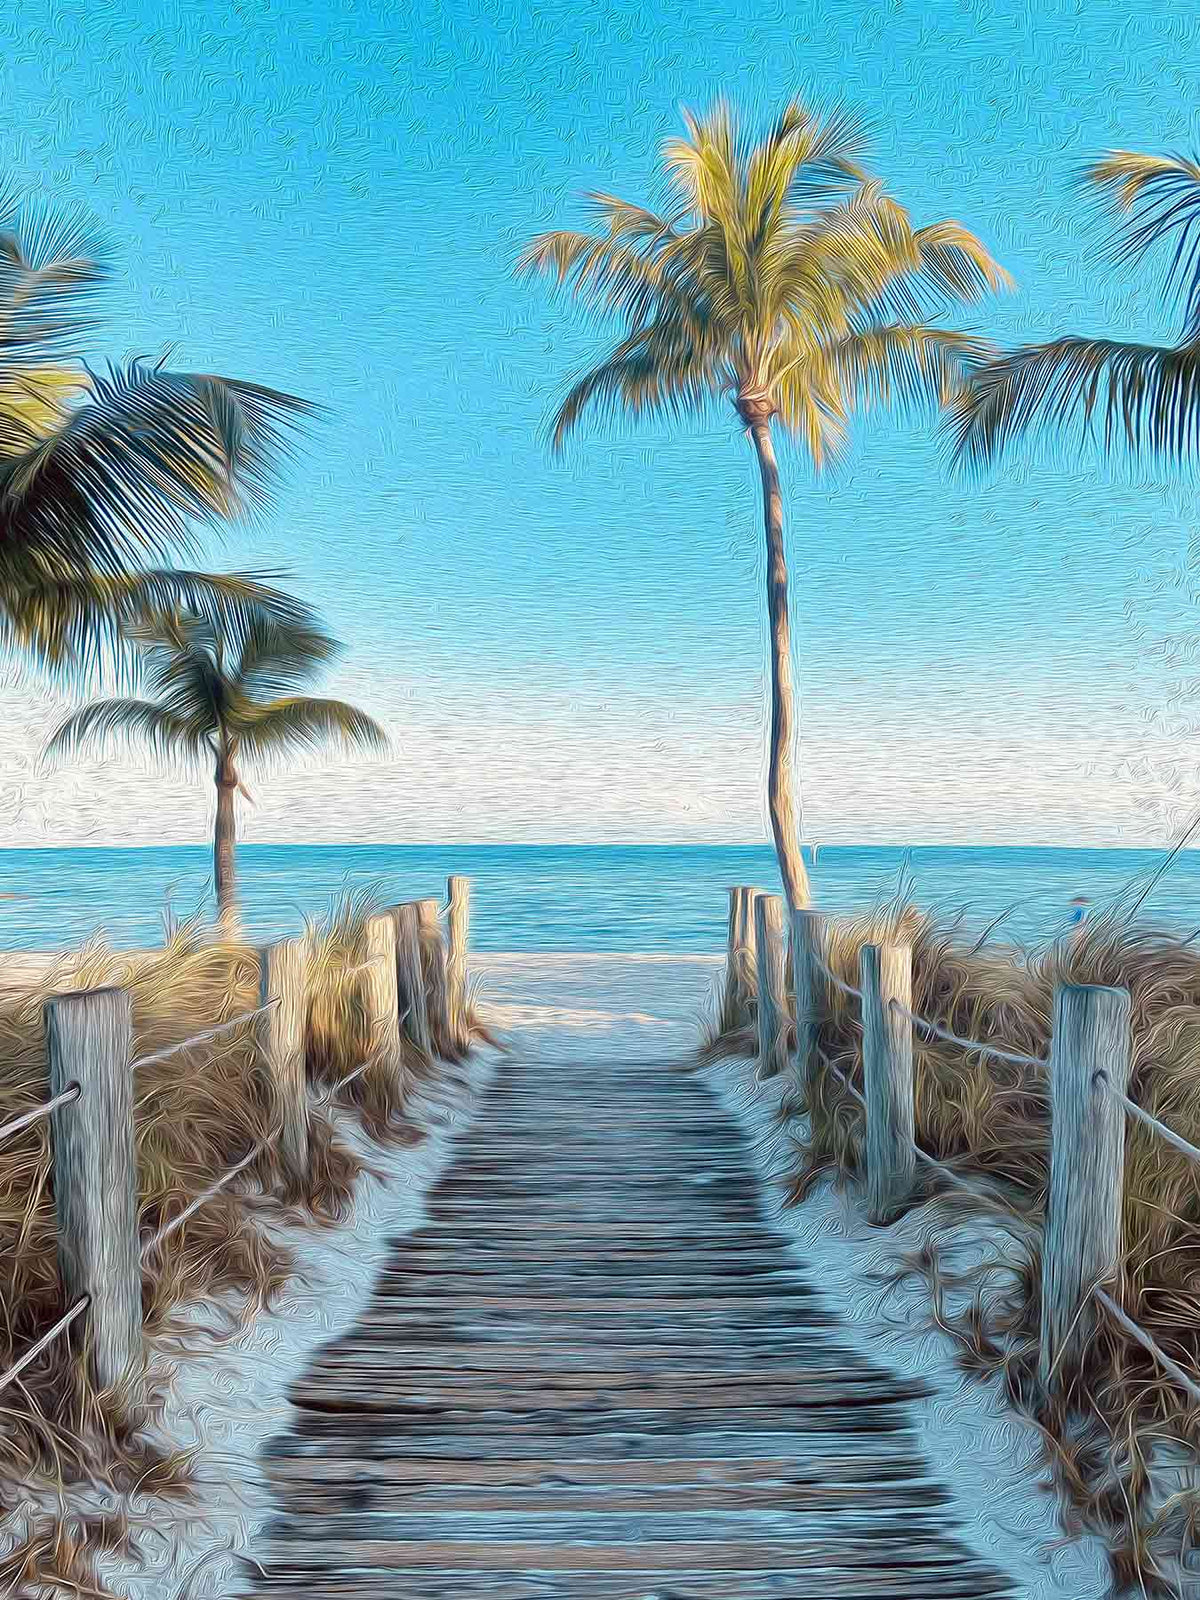 Beach Bum - Key West Art Gallery – Backyards of Key West Gallery